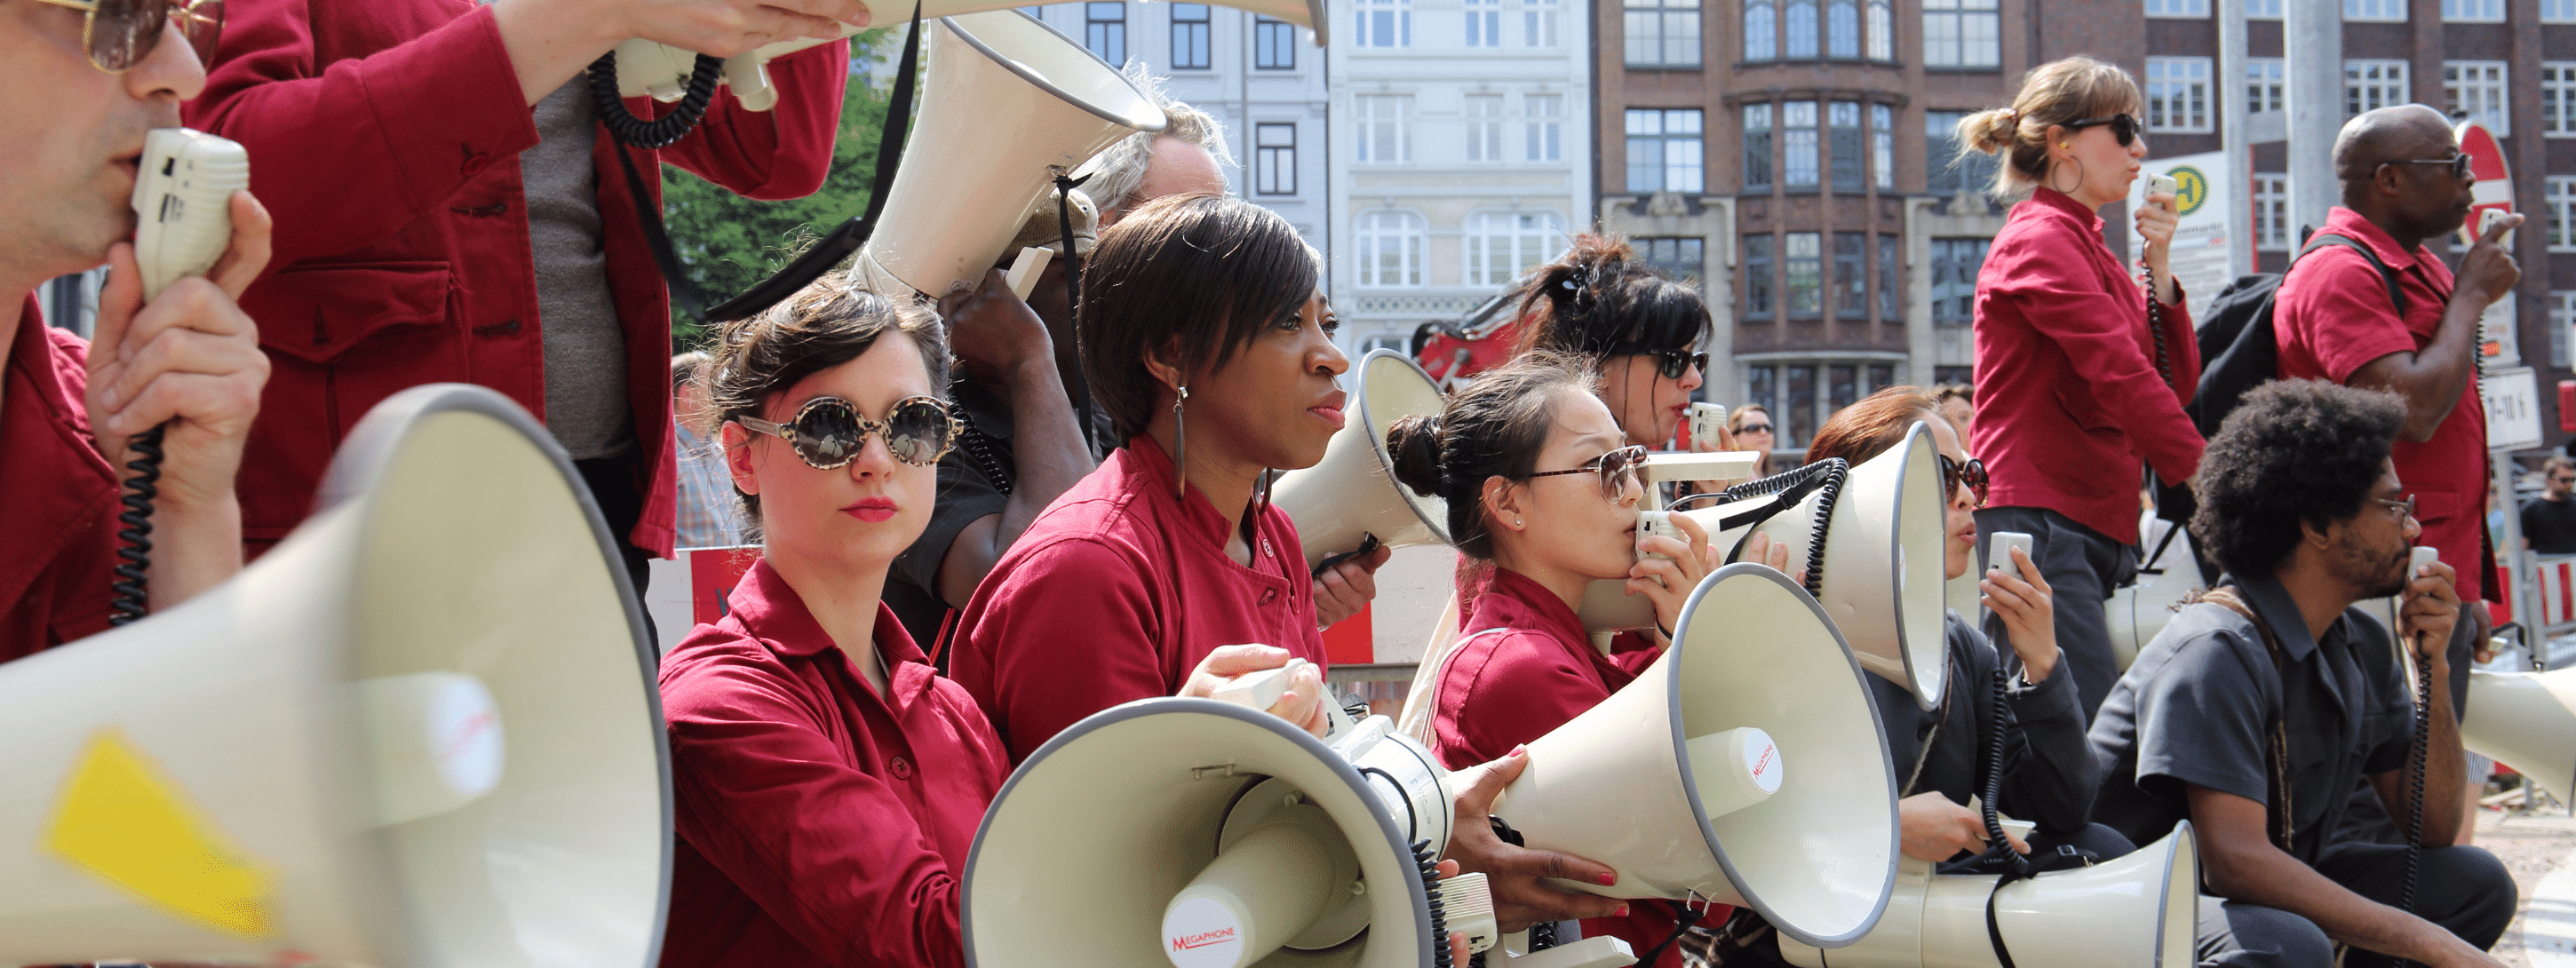 women in red holding loudspeakers